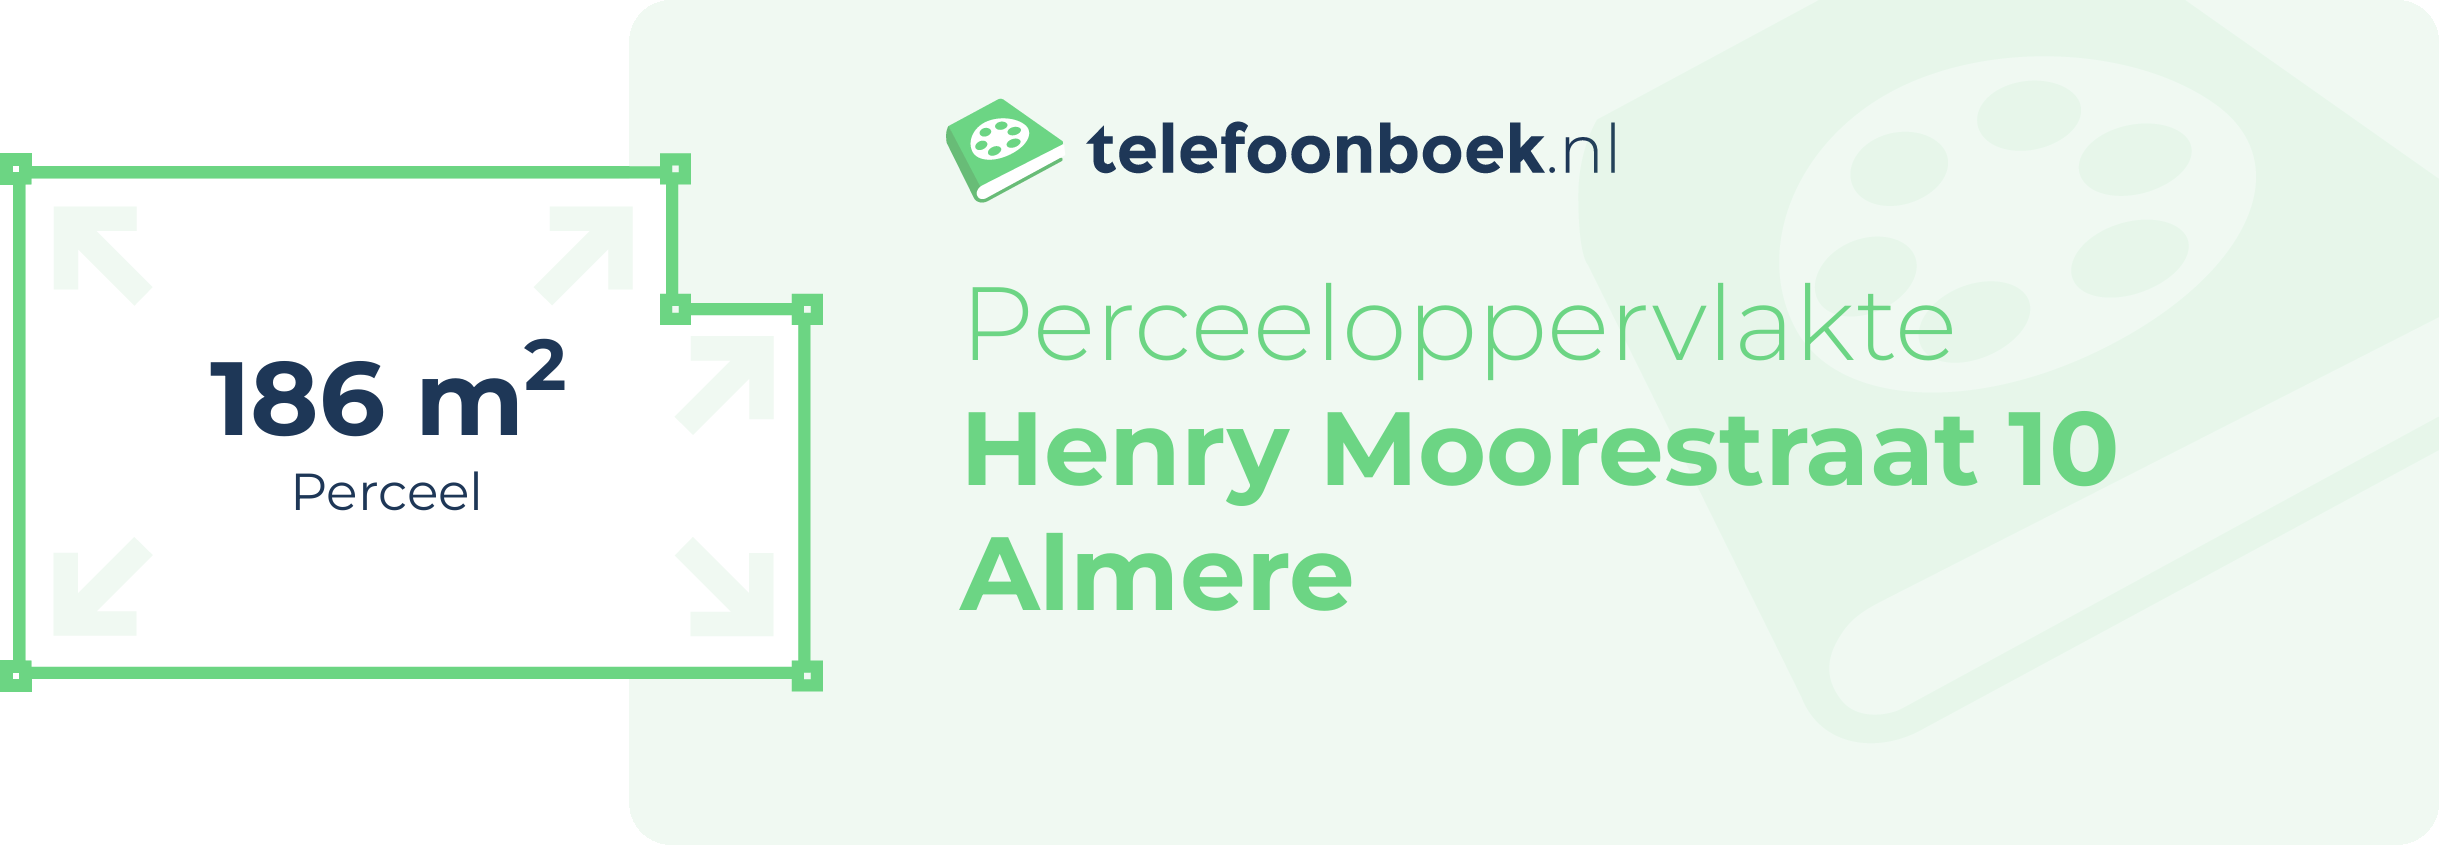 Perceeloppervlakte Henry Moorestraat 10 Almere